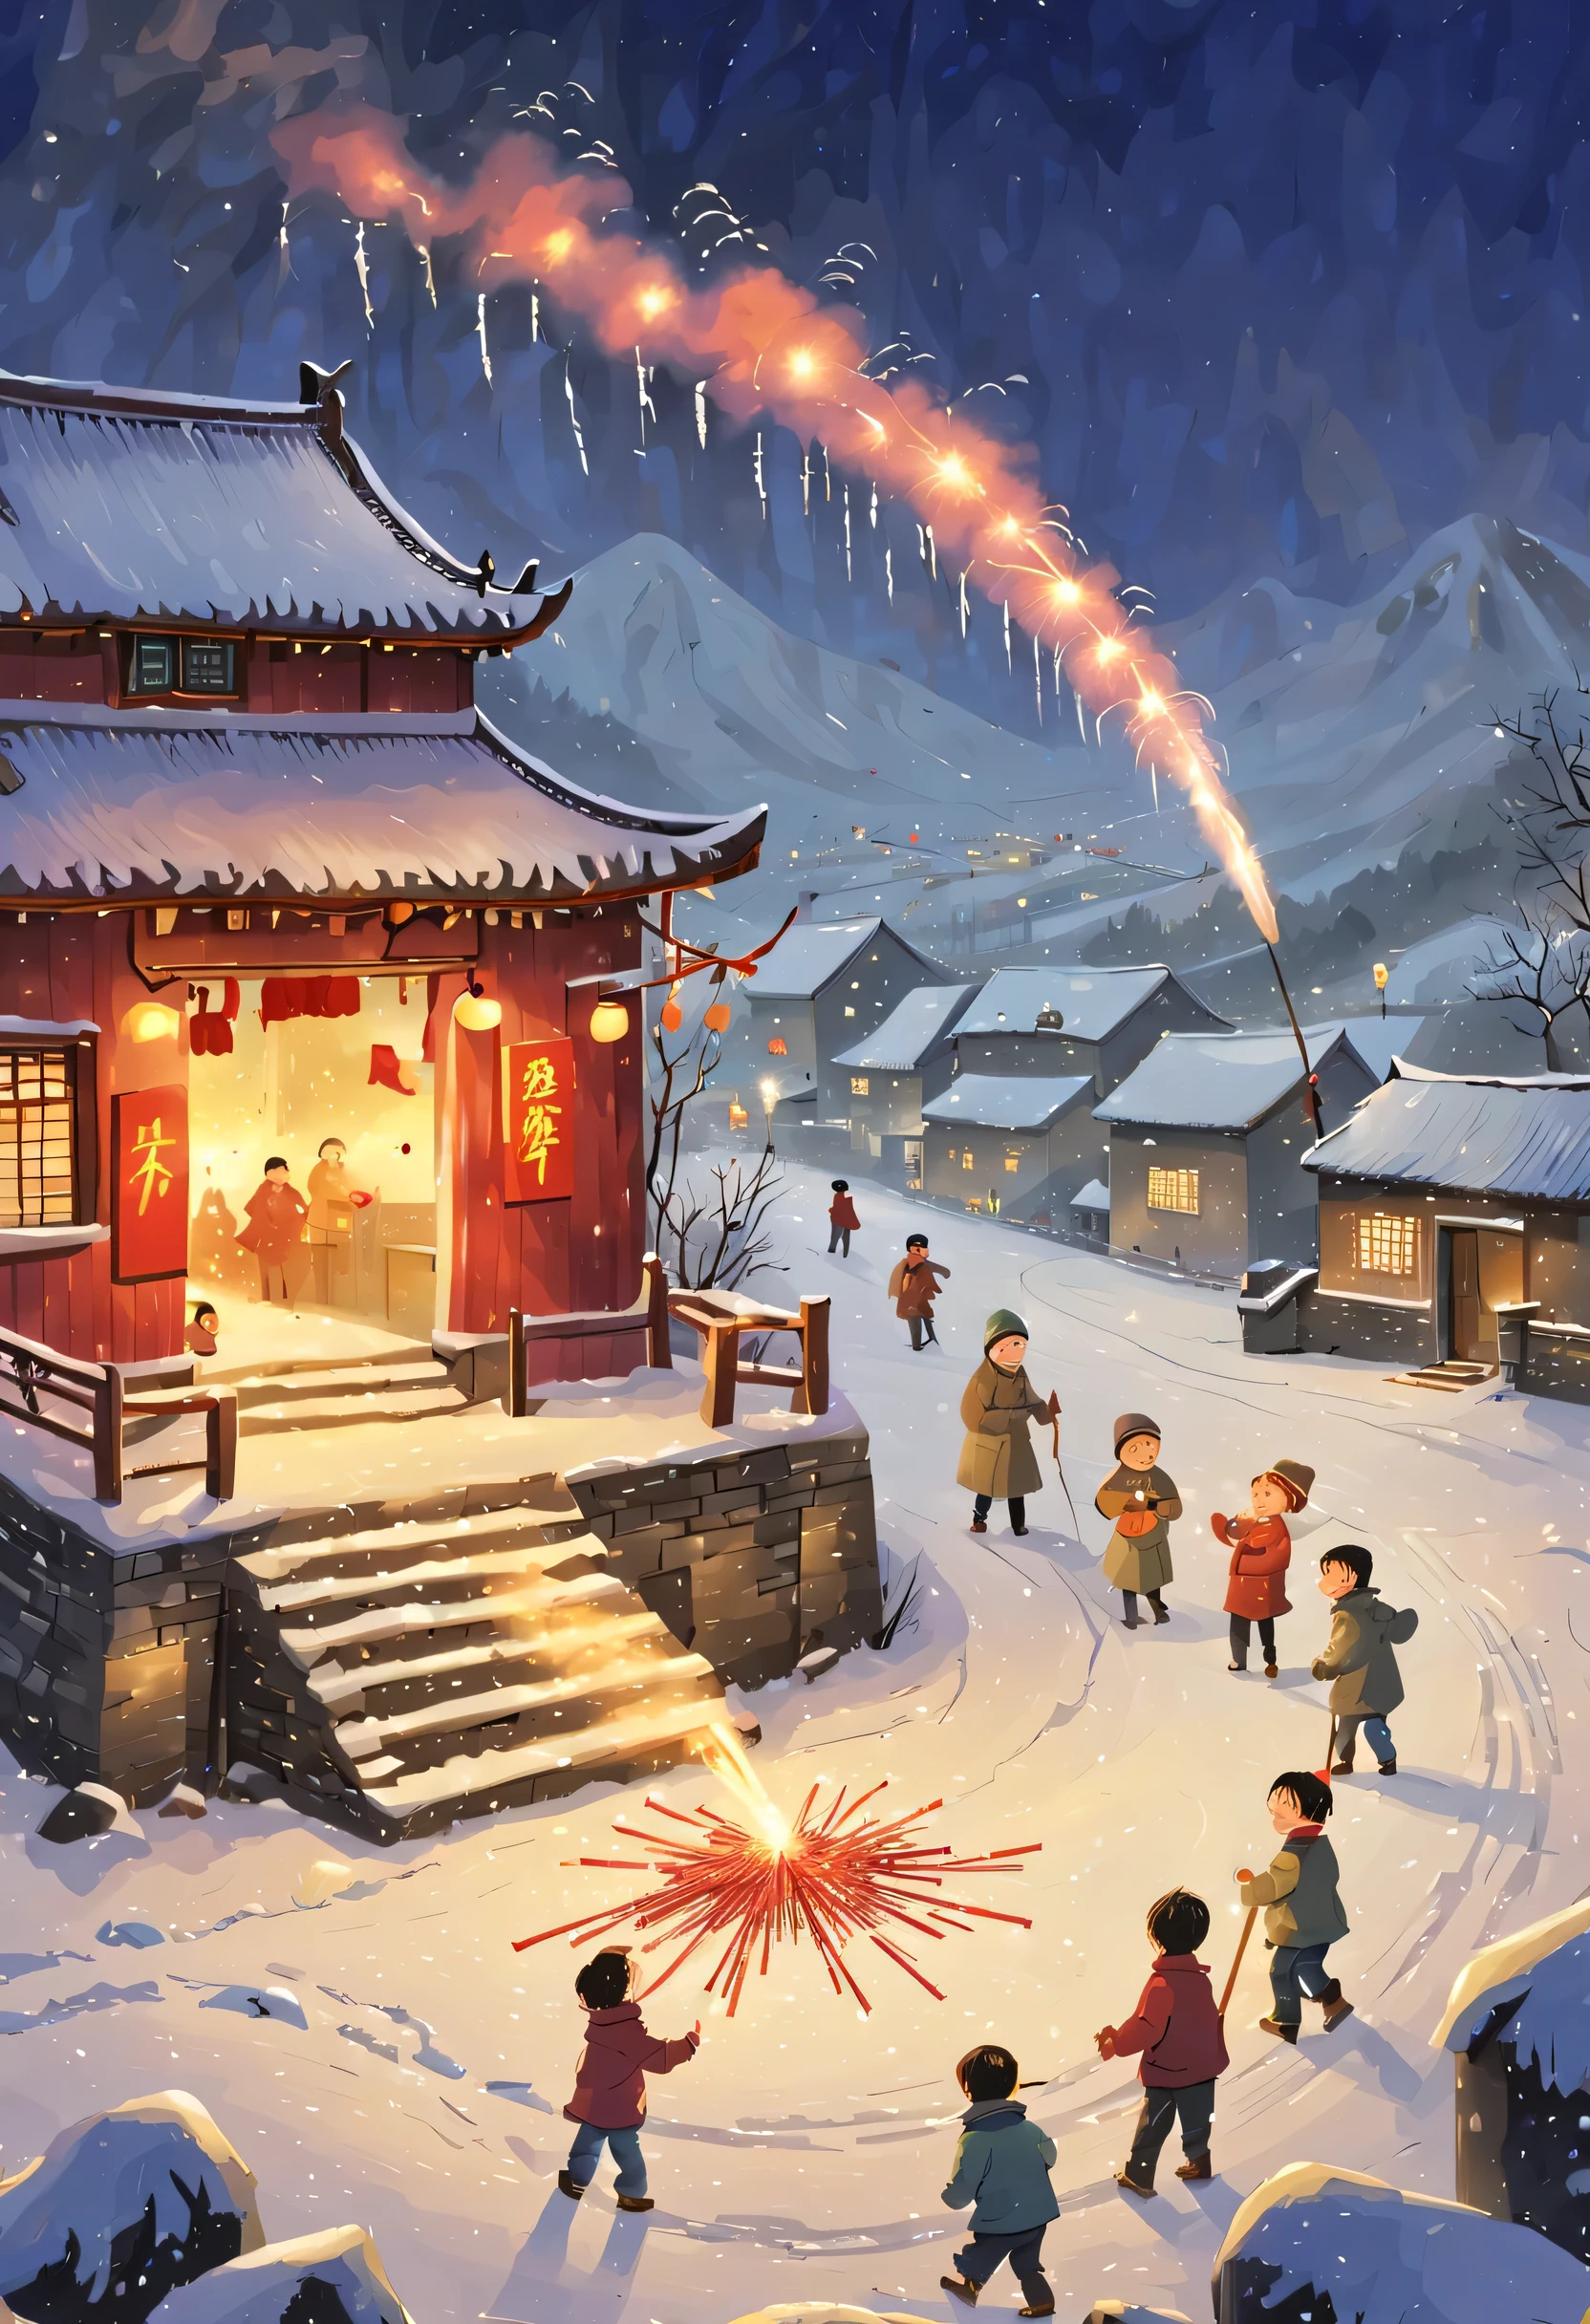 Children are setting off Chinese firecrackers，Crackling，Chinese rural snow scene，Joyful festive atmosphere，，pixar-style，illuminations